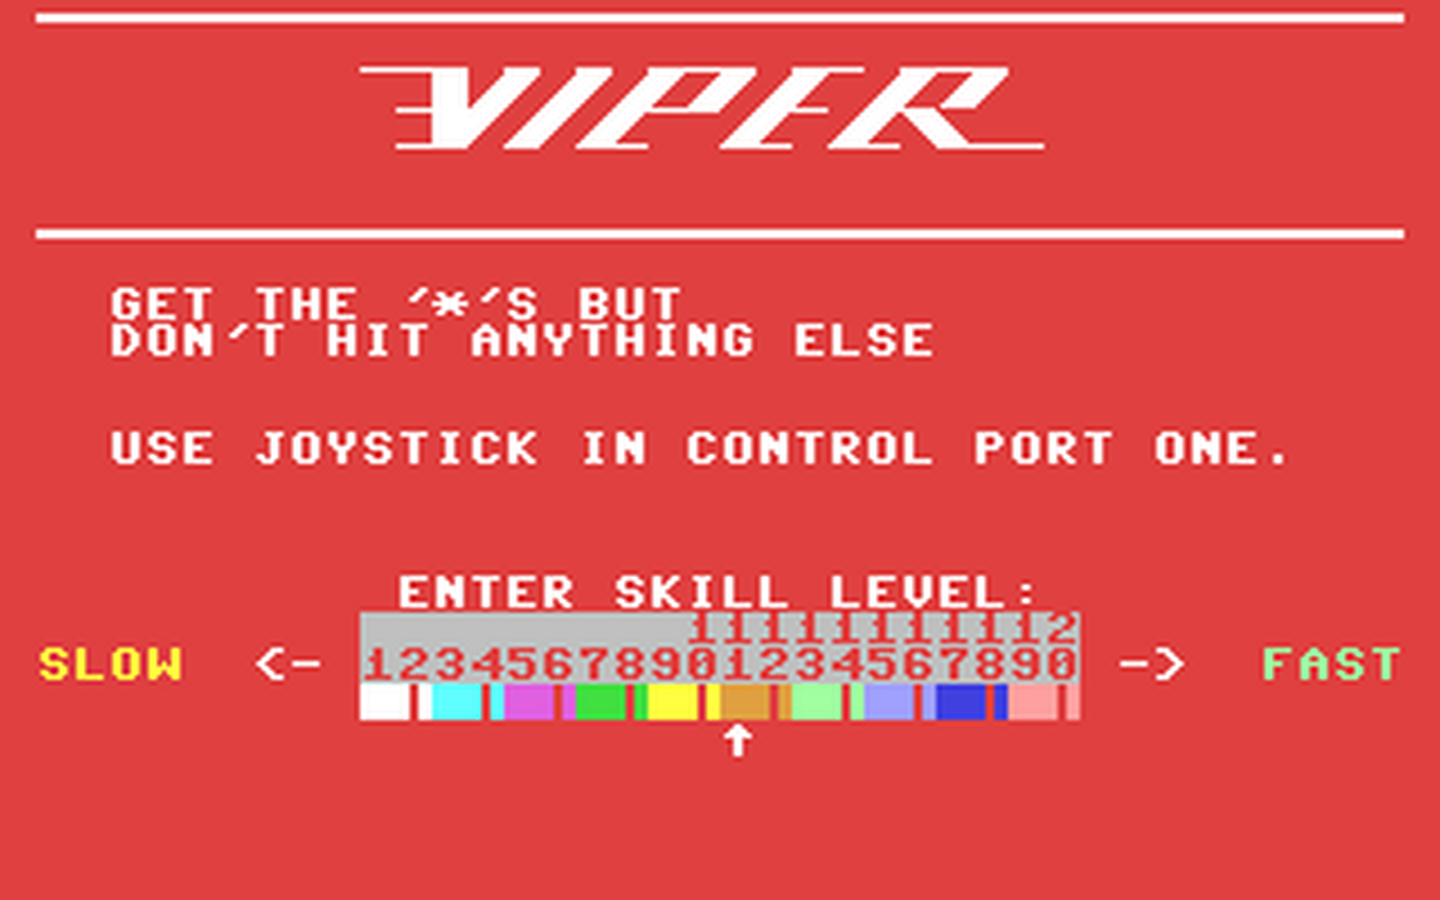 C64 GameBase Viper,_The COMPUTE!_Publications,_Inc./COMPUTE!'s_Gazette 1983